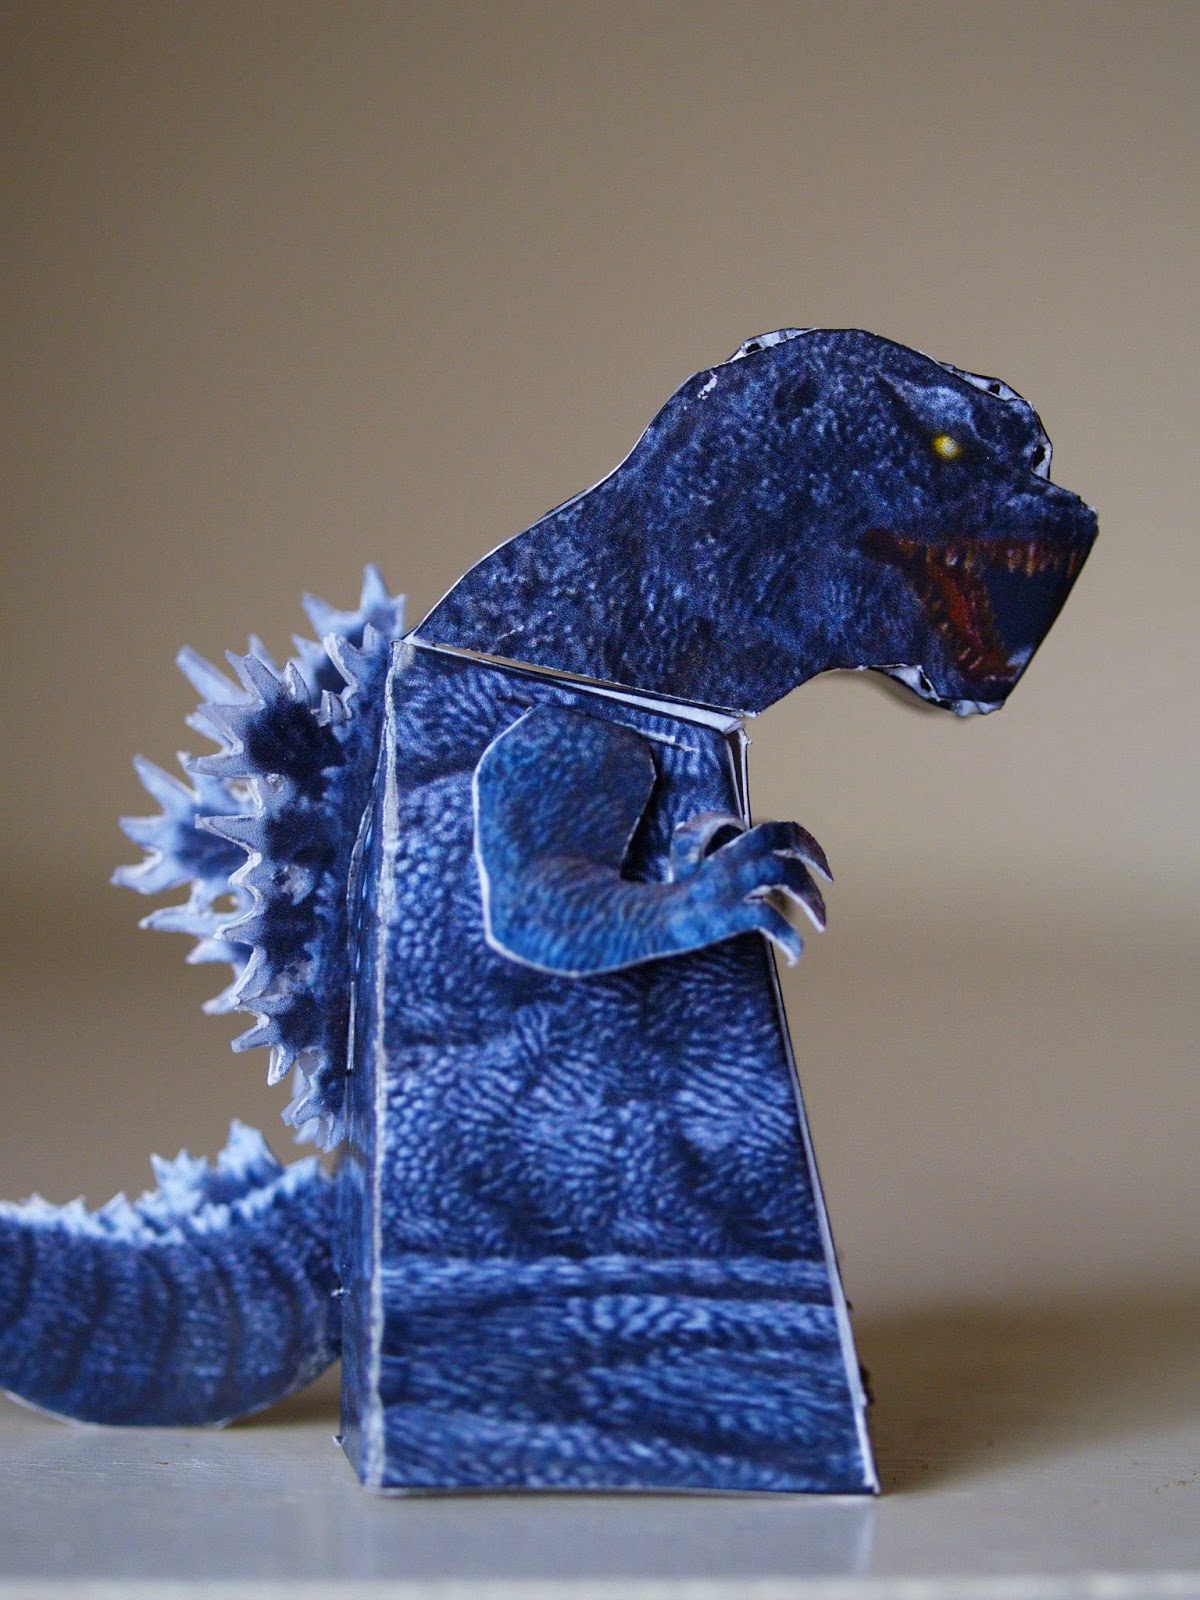 Darkeyedkid's Papermodels and Memos: Godzilla GMK Papercraft!